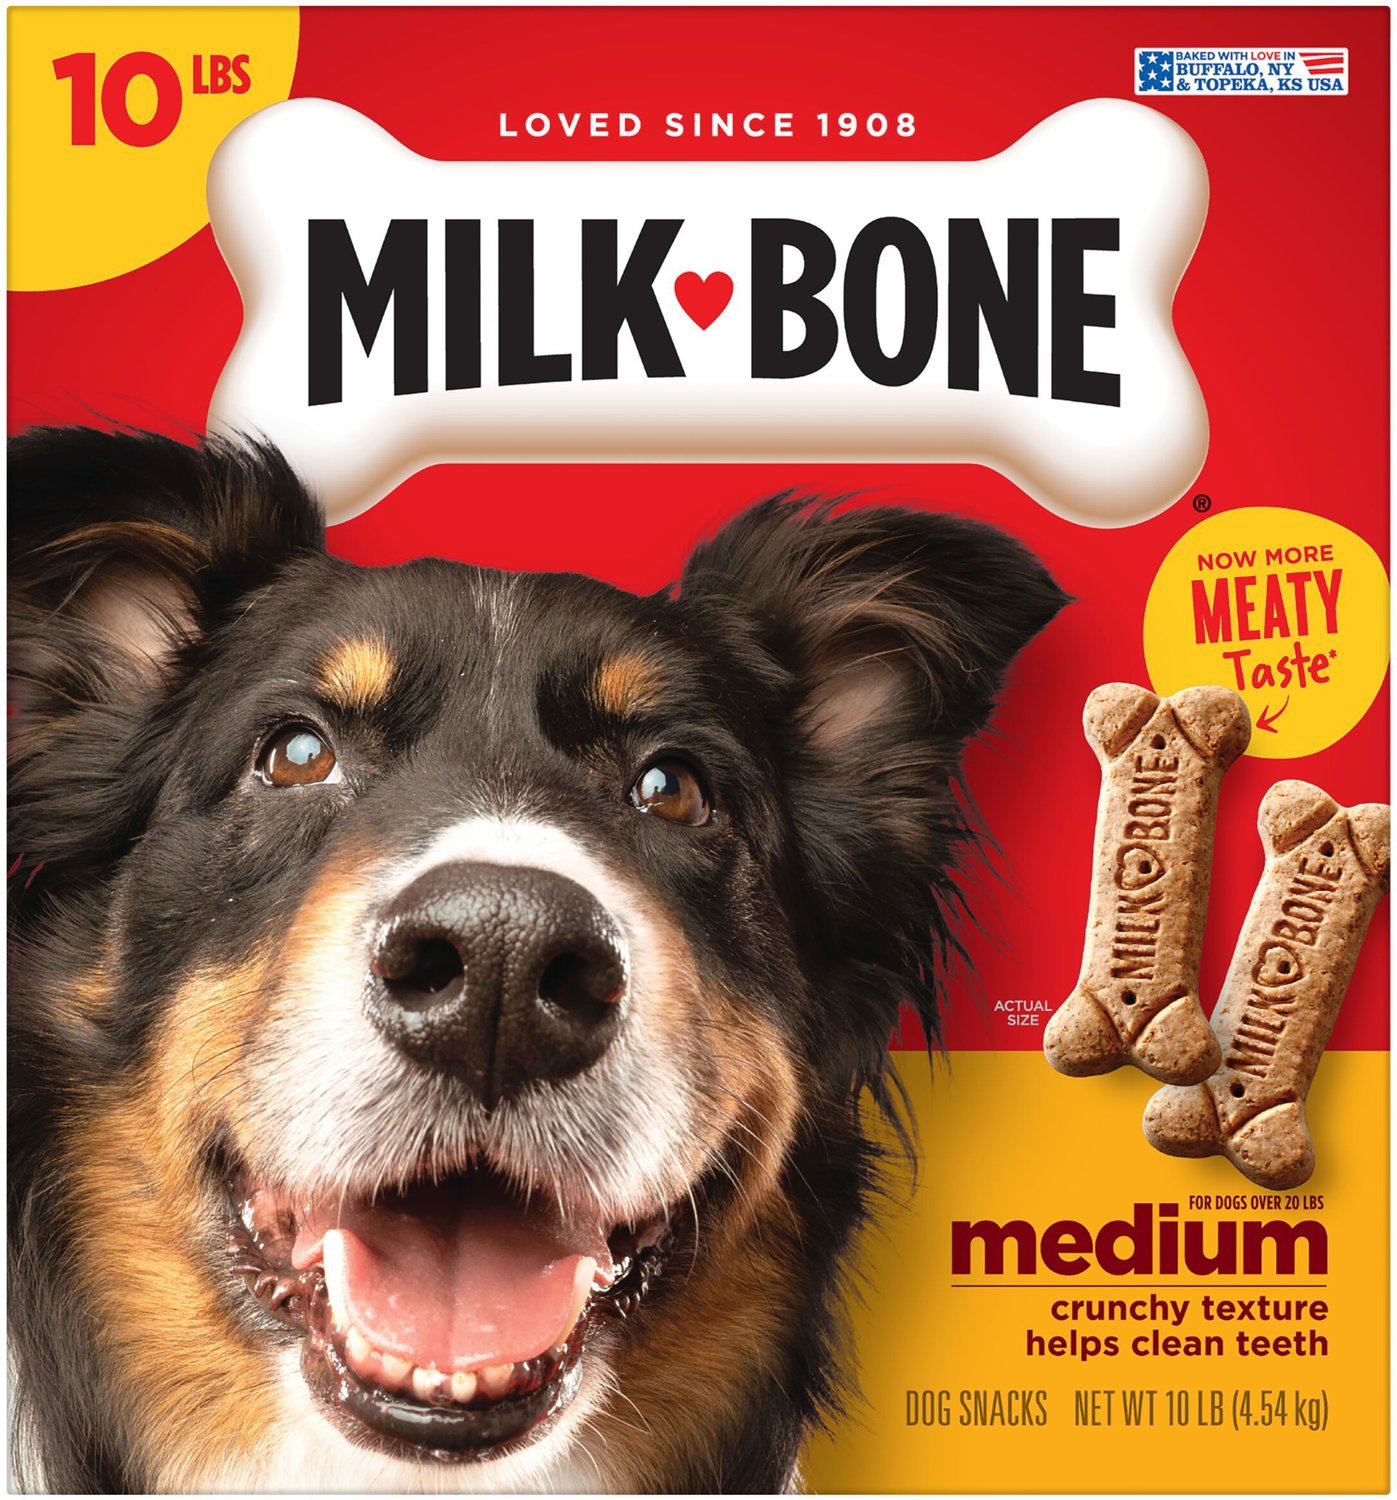 are milk bones good for dogs teeth